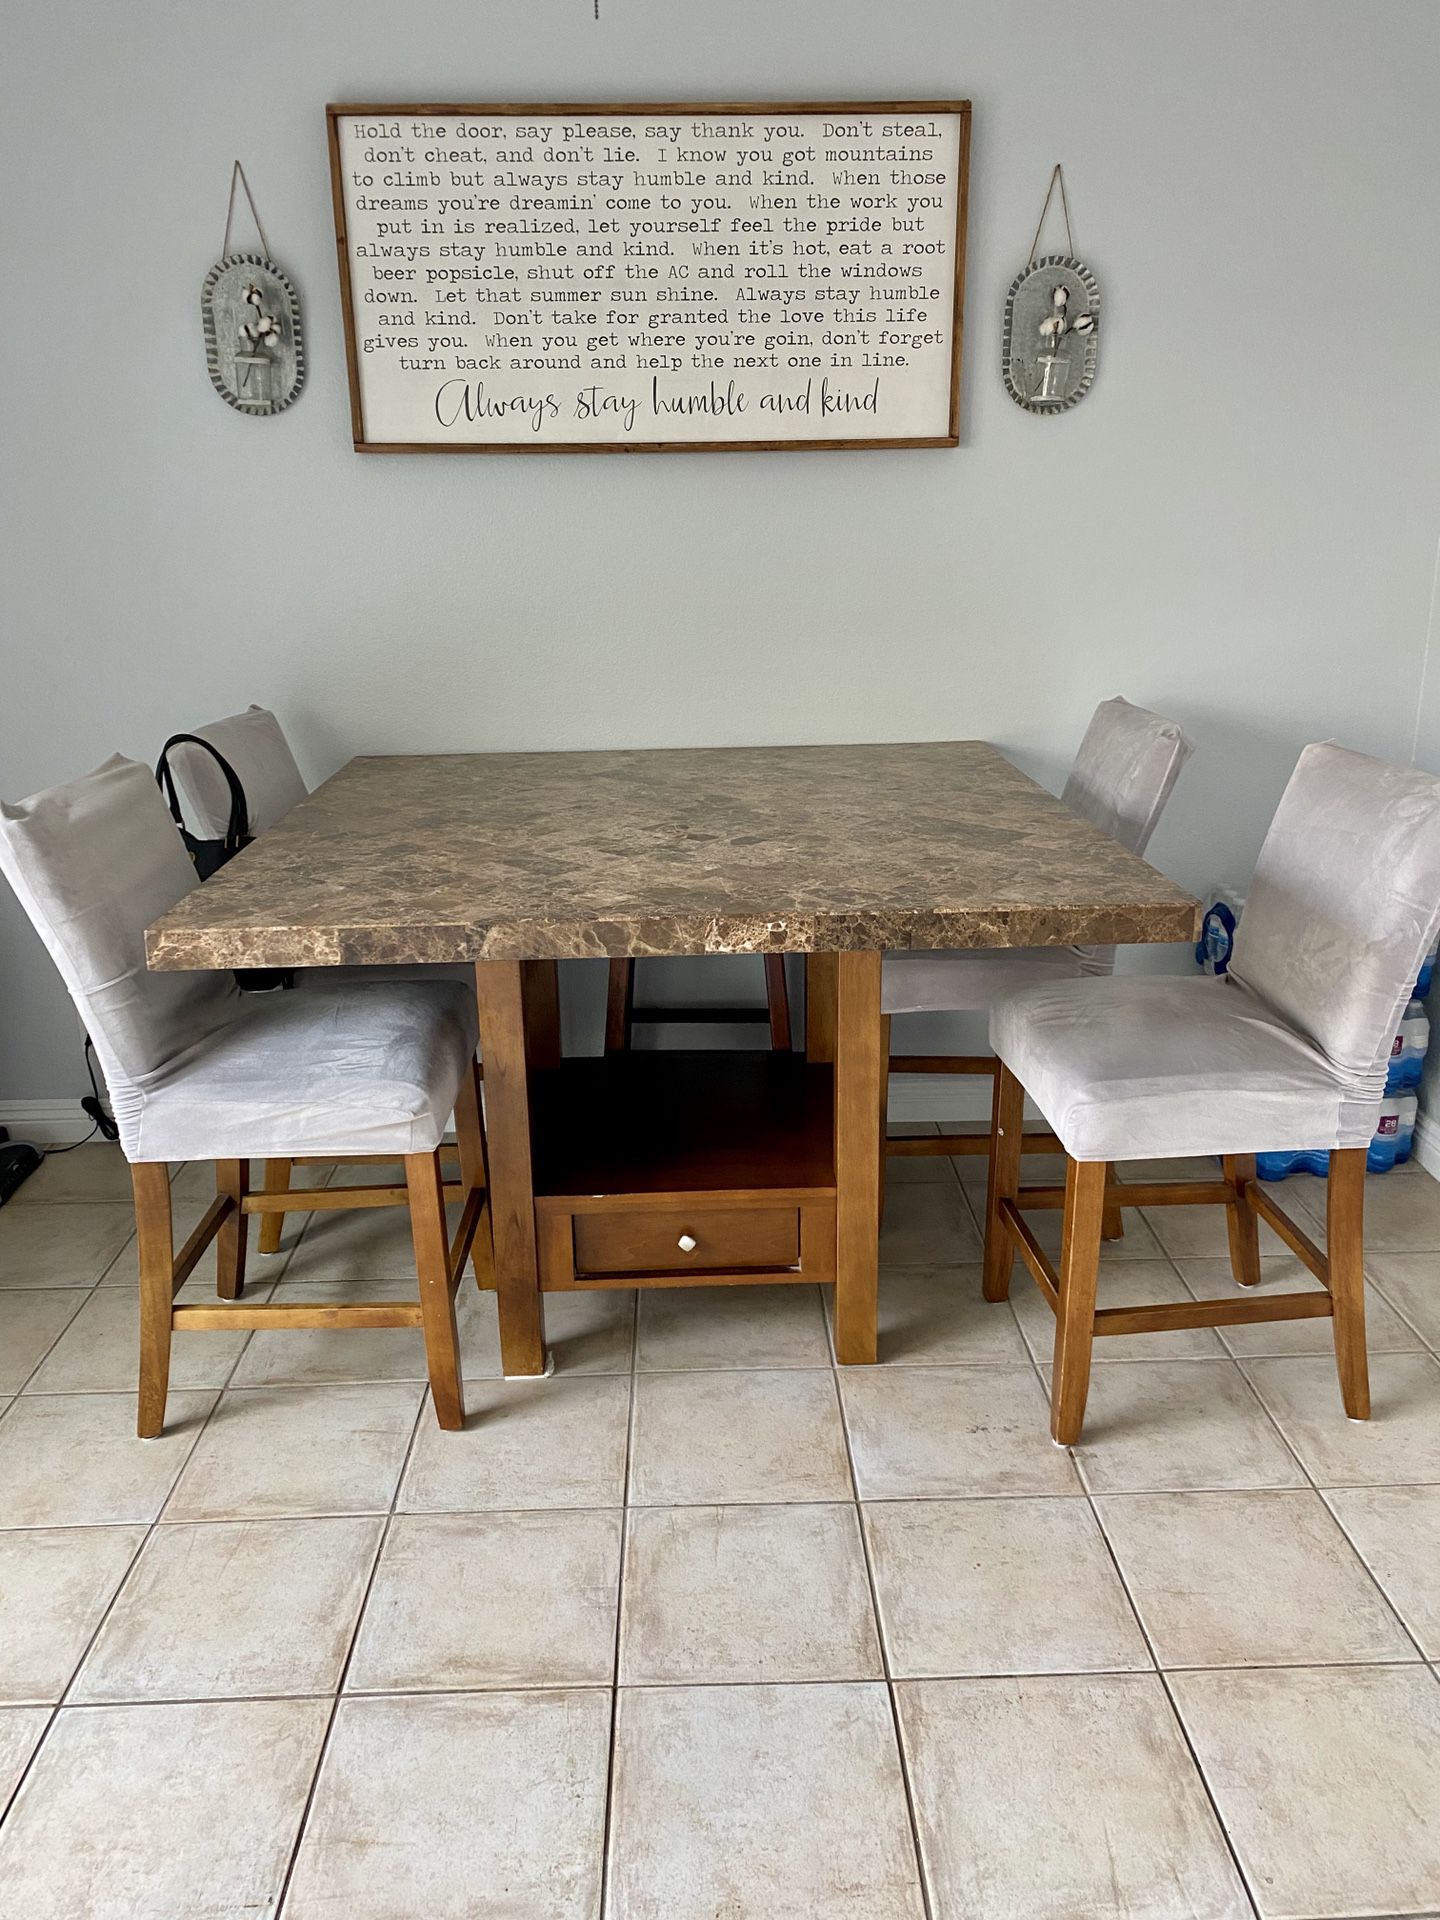 Granite top kitchen table from Costco